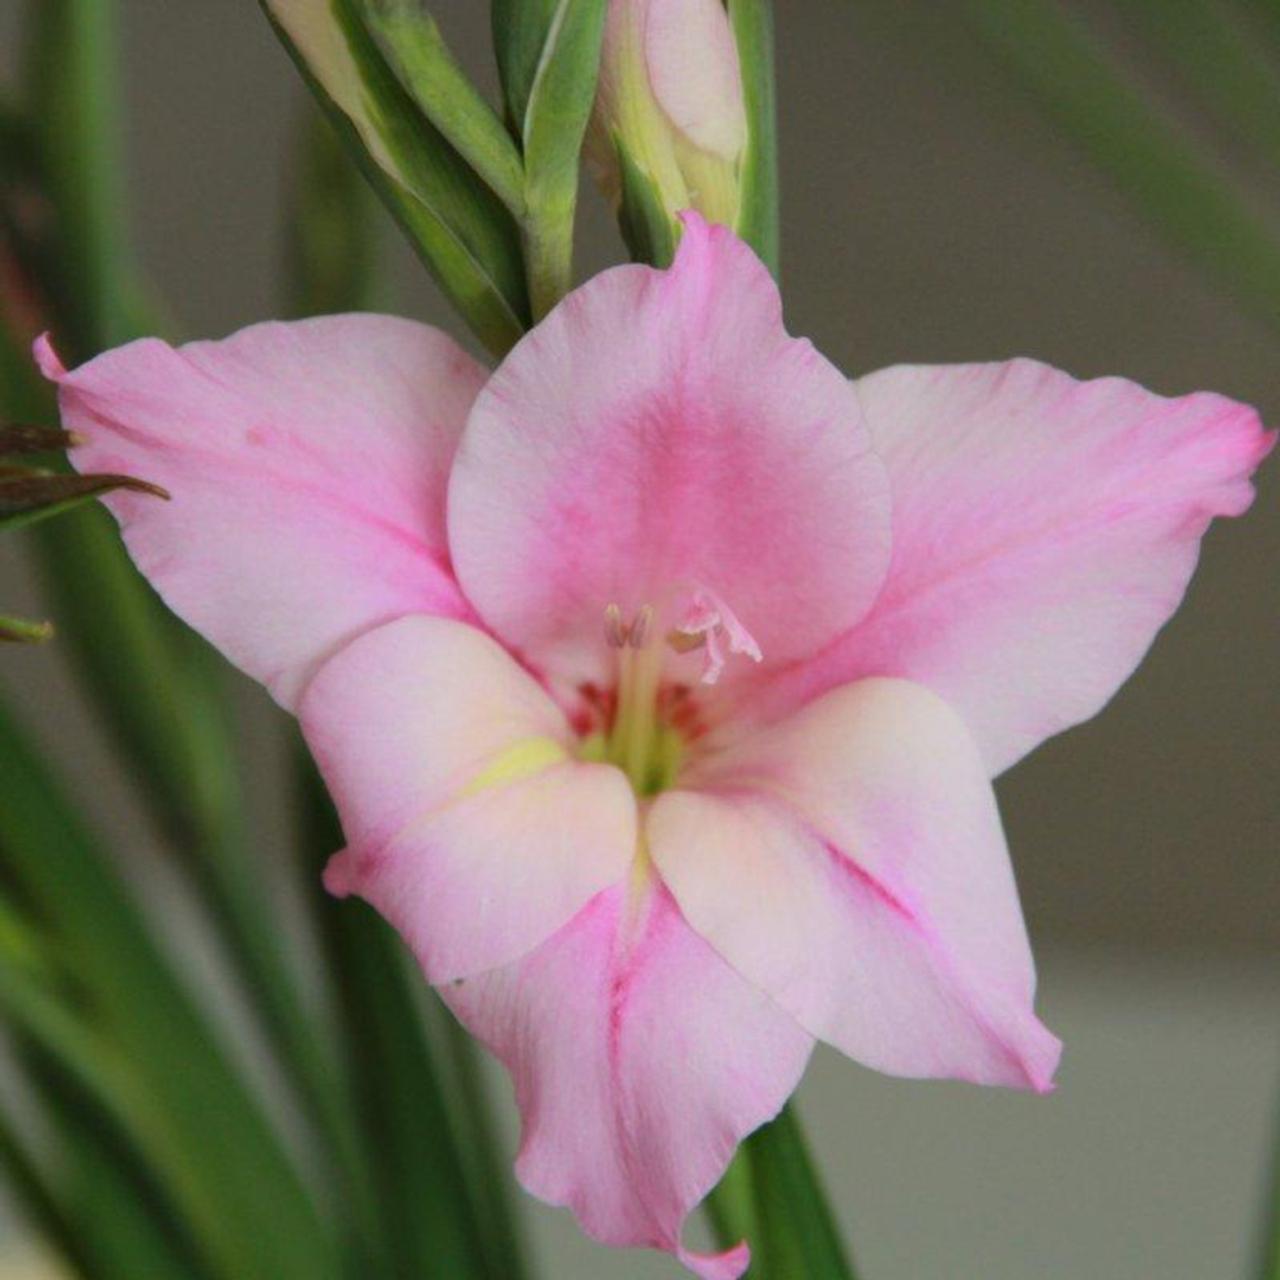 Gladiolus tubergenii 'Charming Lady' plant